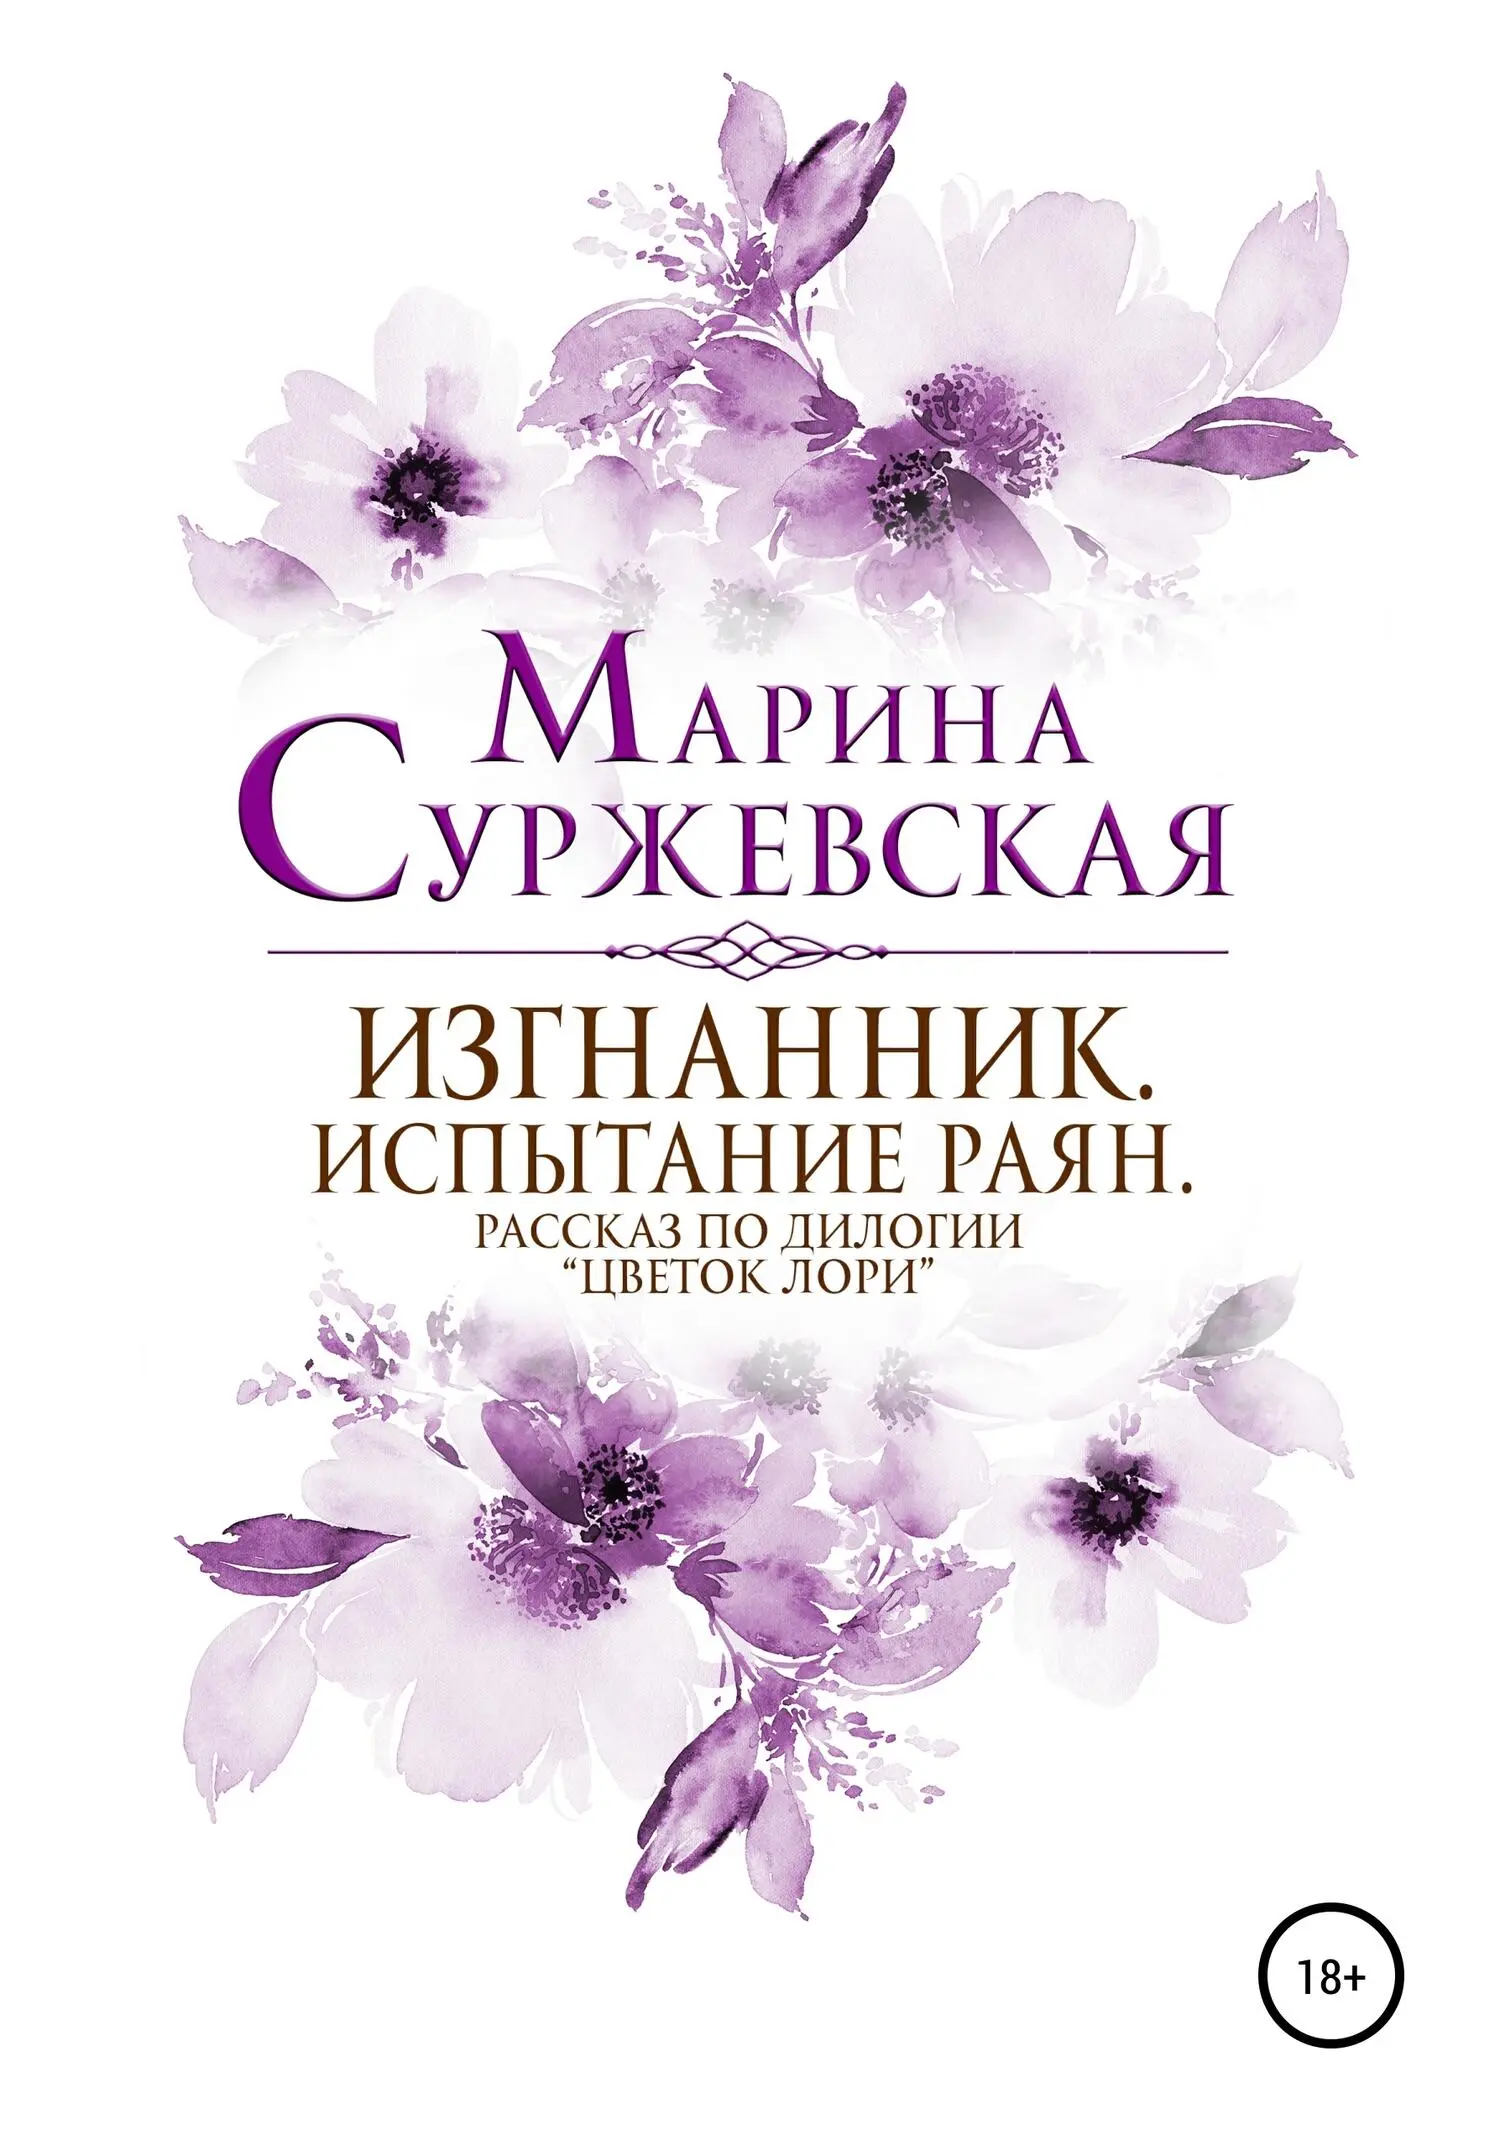 ru Марина Суржевская calibre 3440 FictionBook Editor Release 267 2017 - фото 1